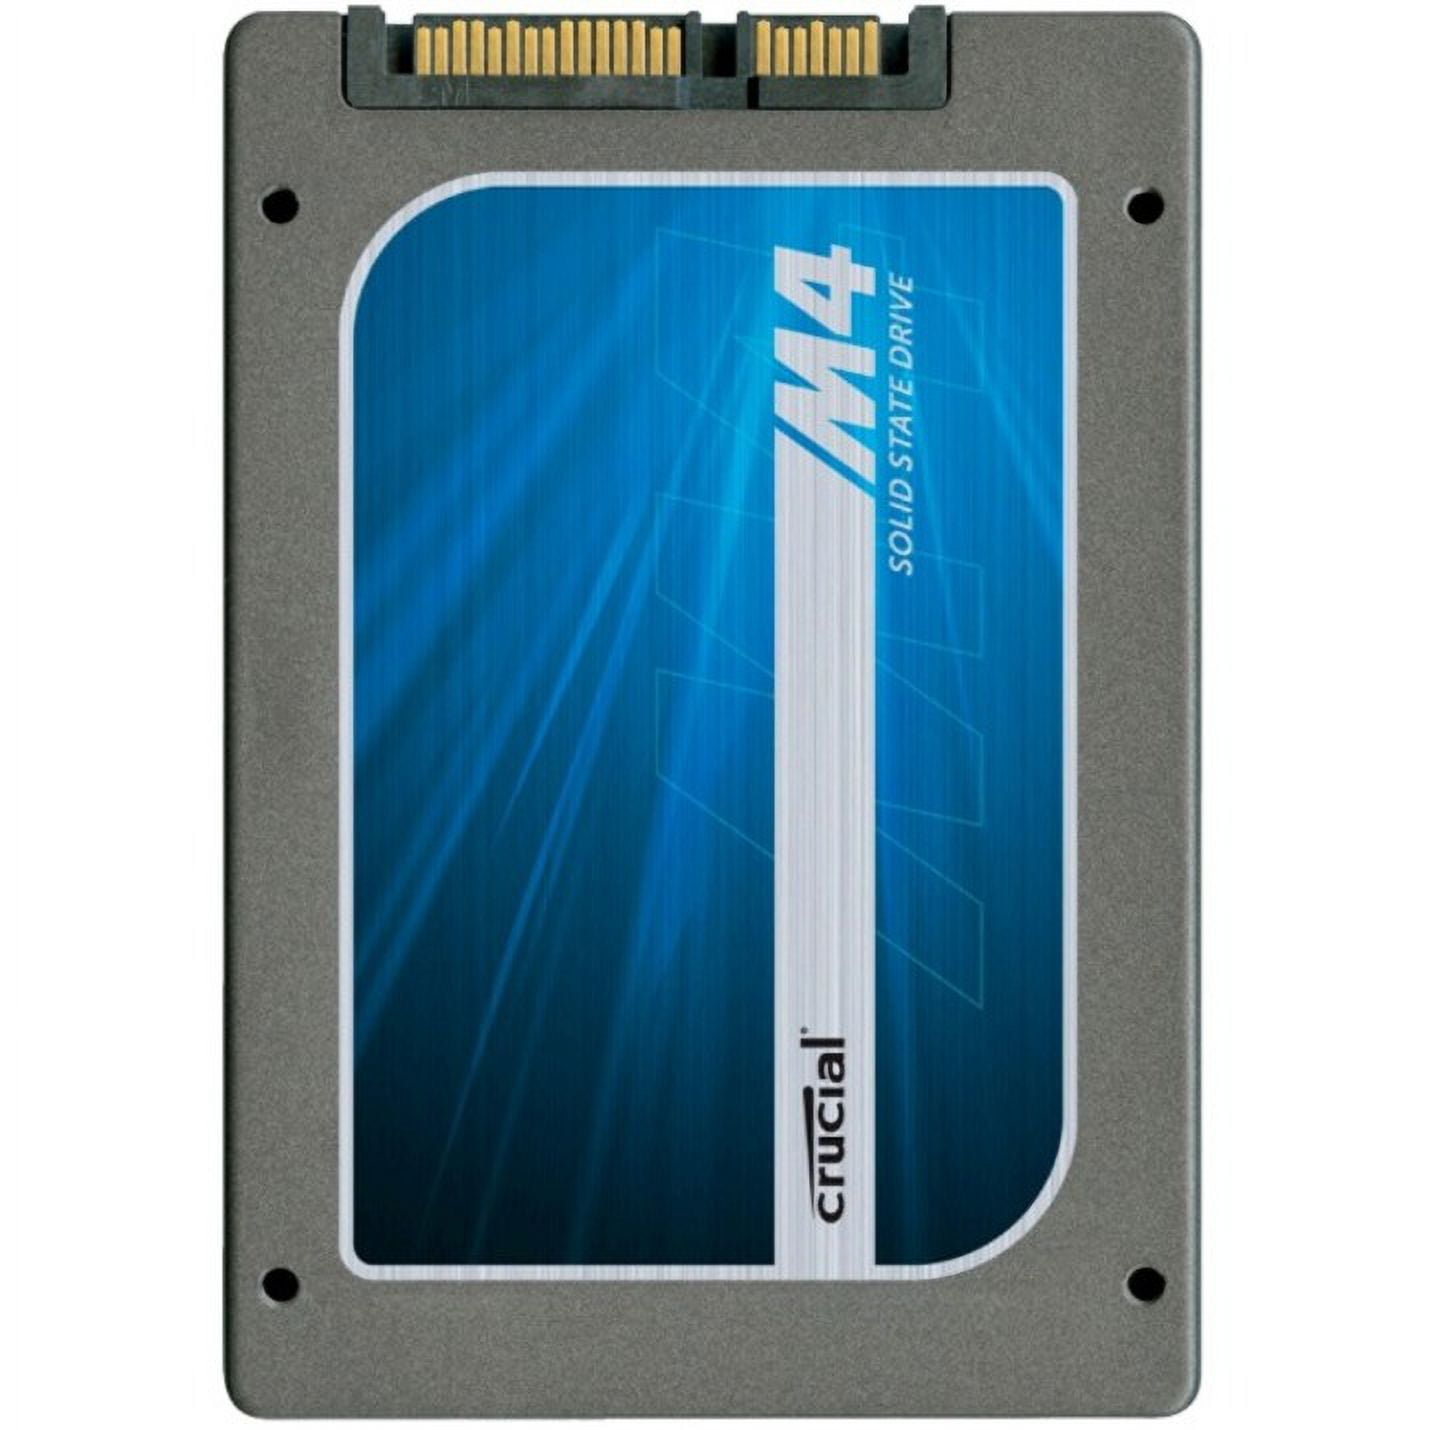 Crucial 512GB m4 SSD 2.5 Solid State Internal Drive CT512M4SSD2